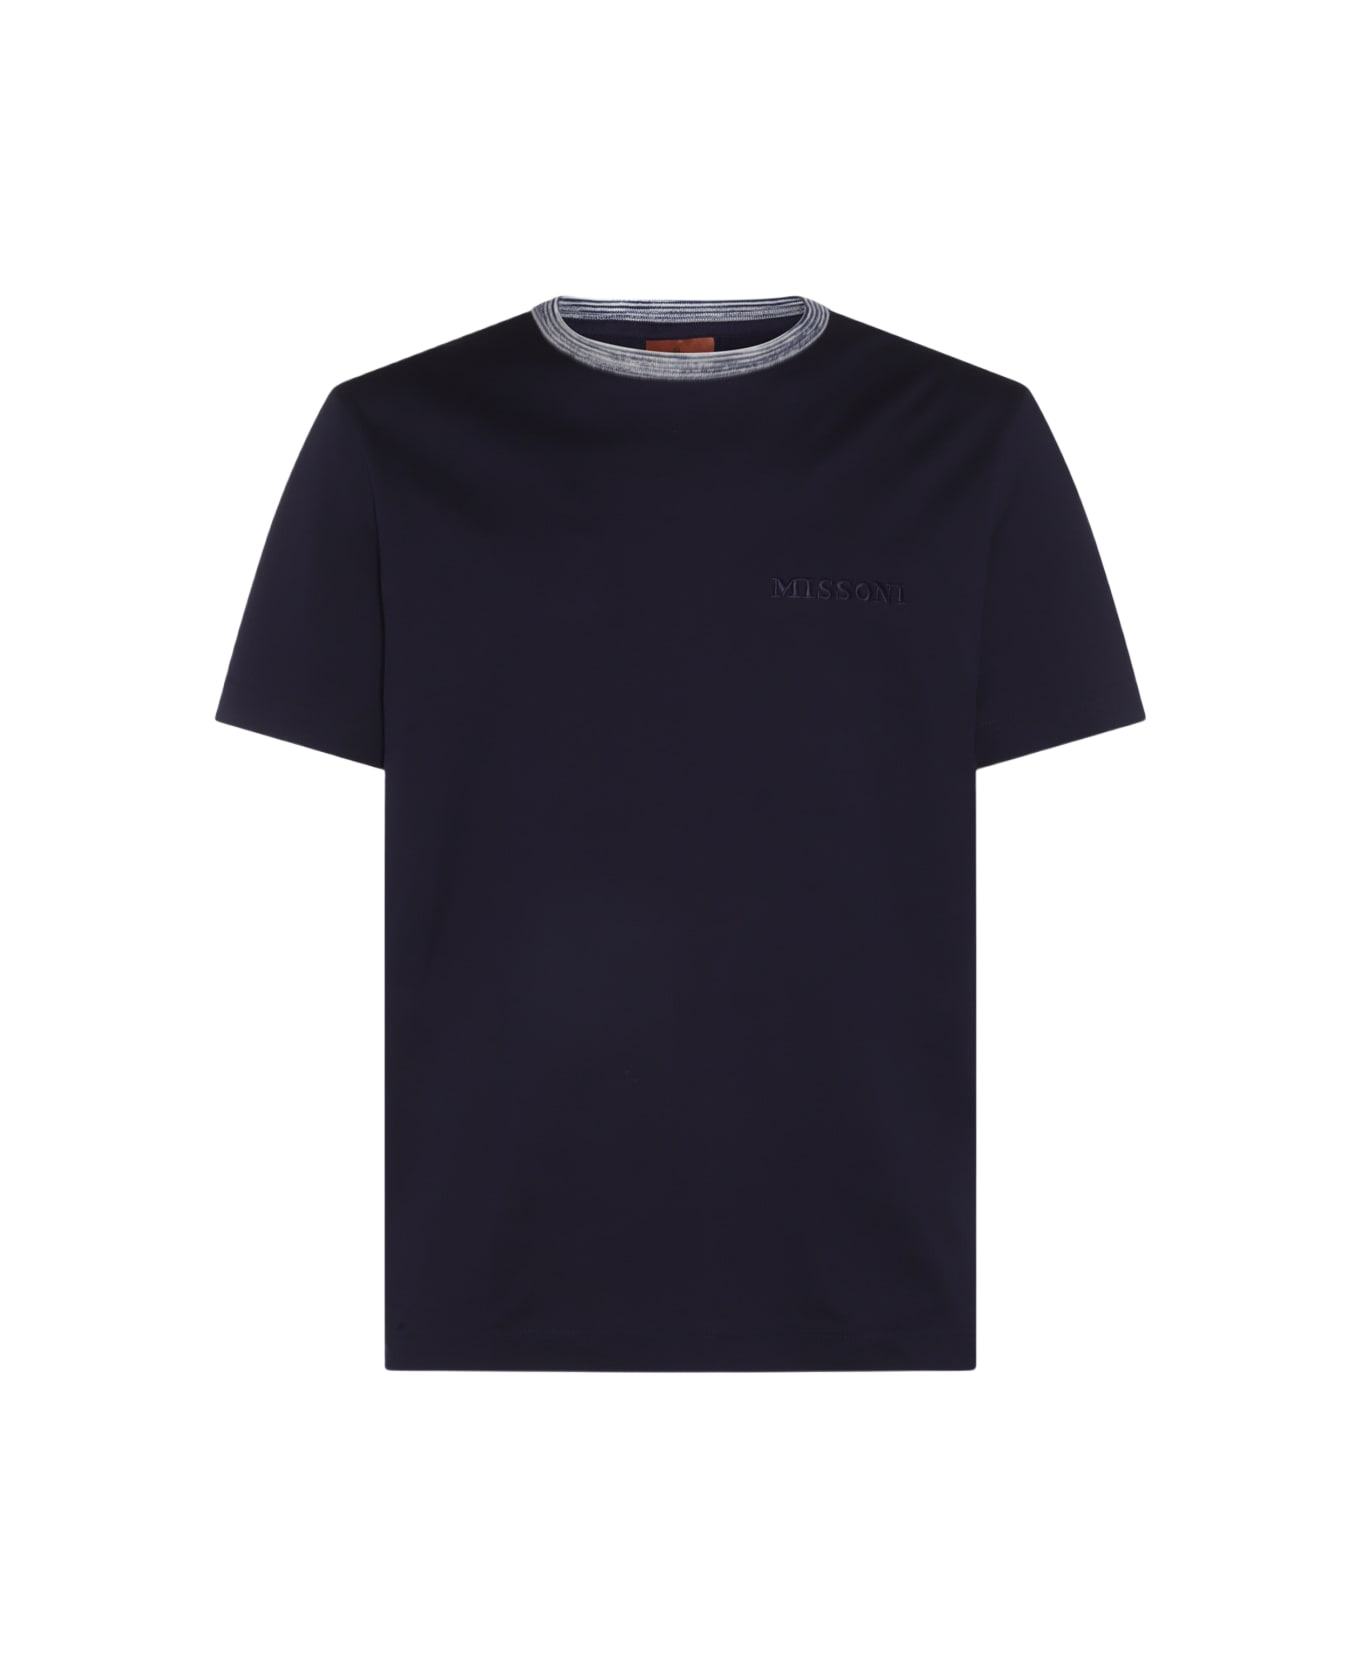 Missoni Black Cotton T-shirt - Blue シャツ